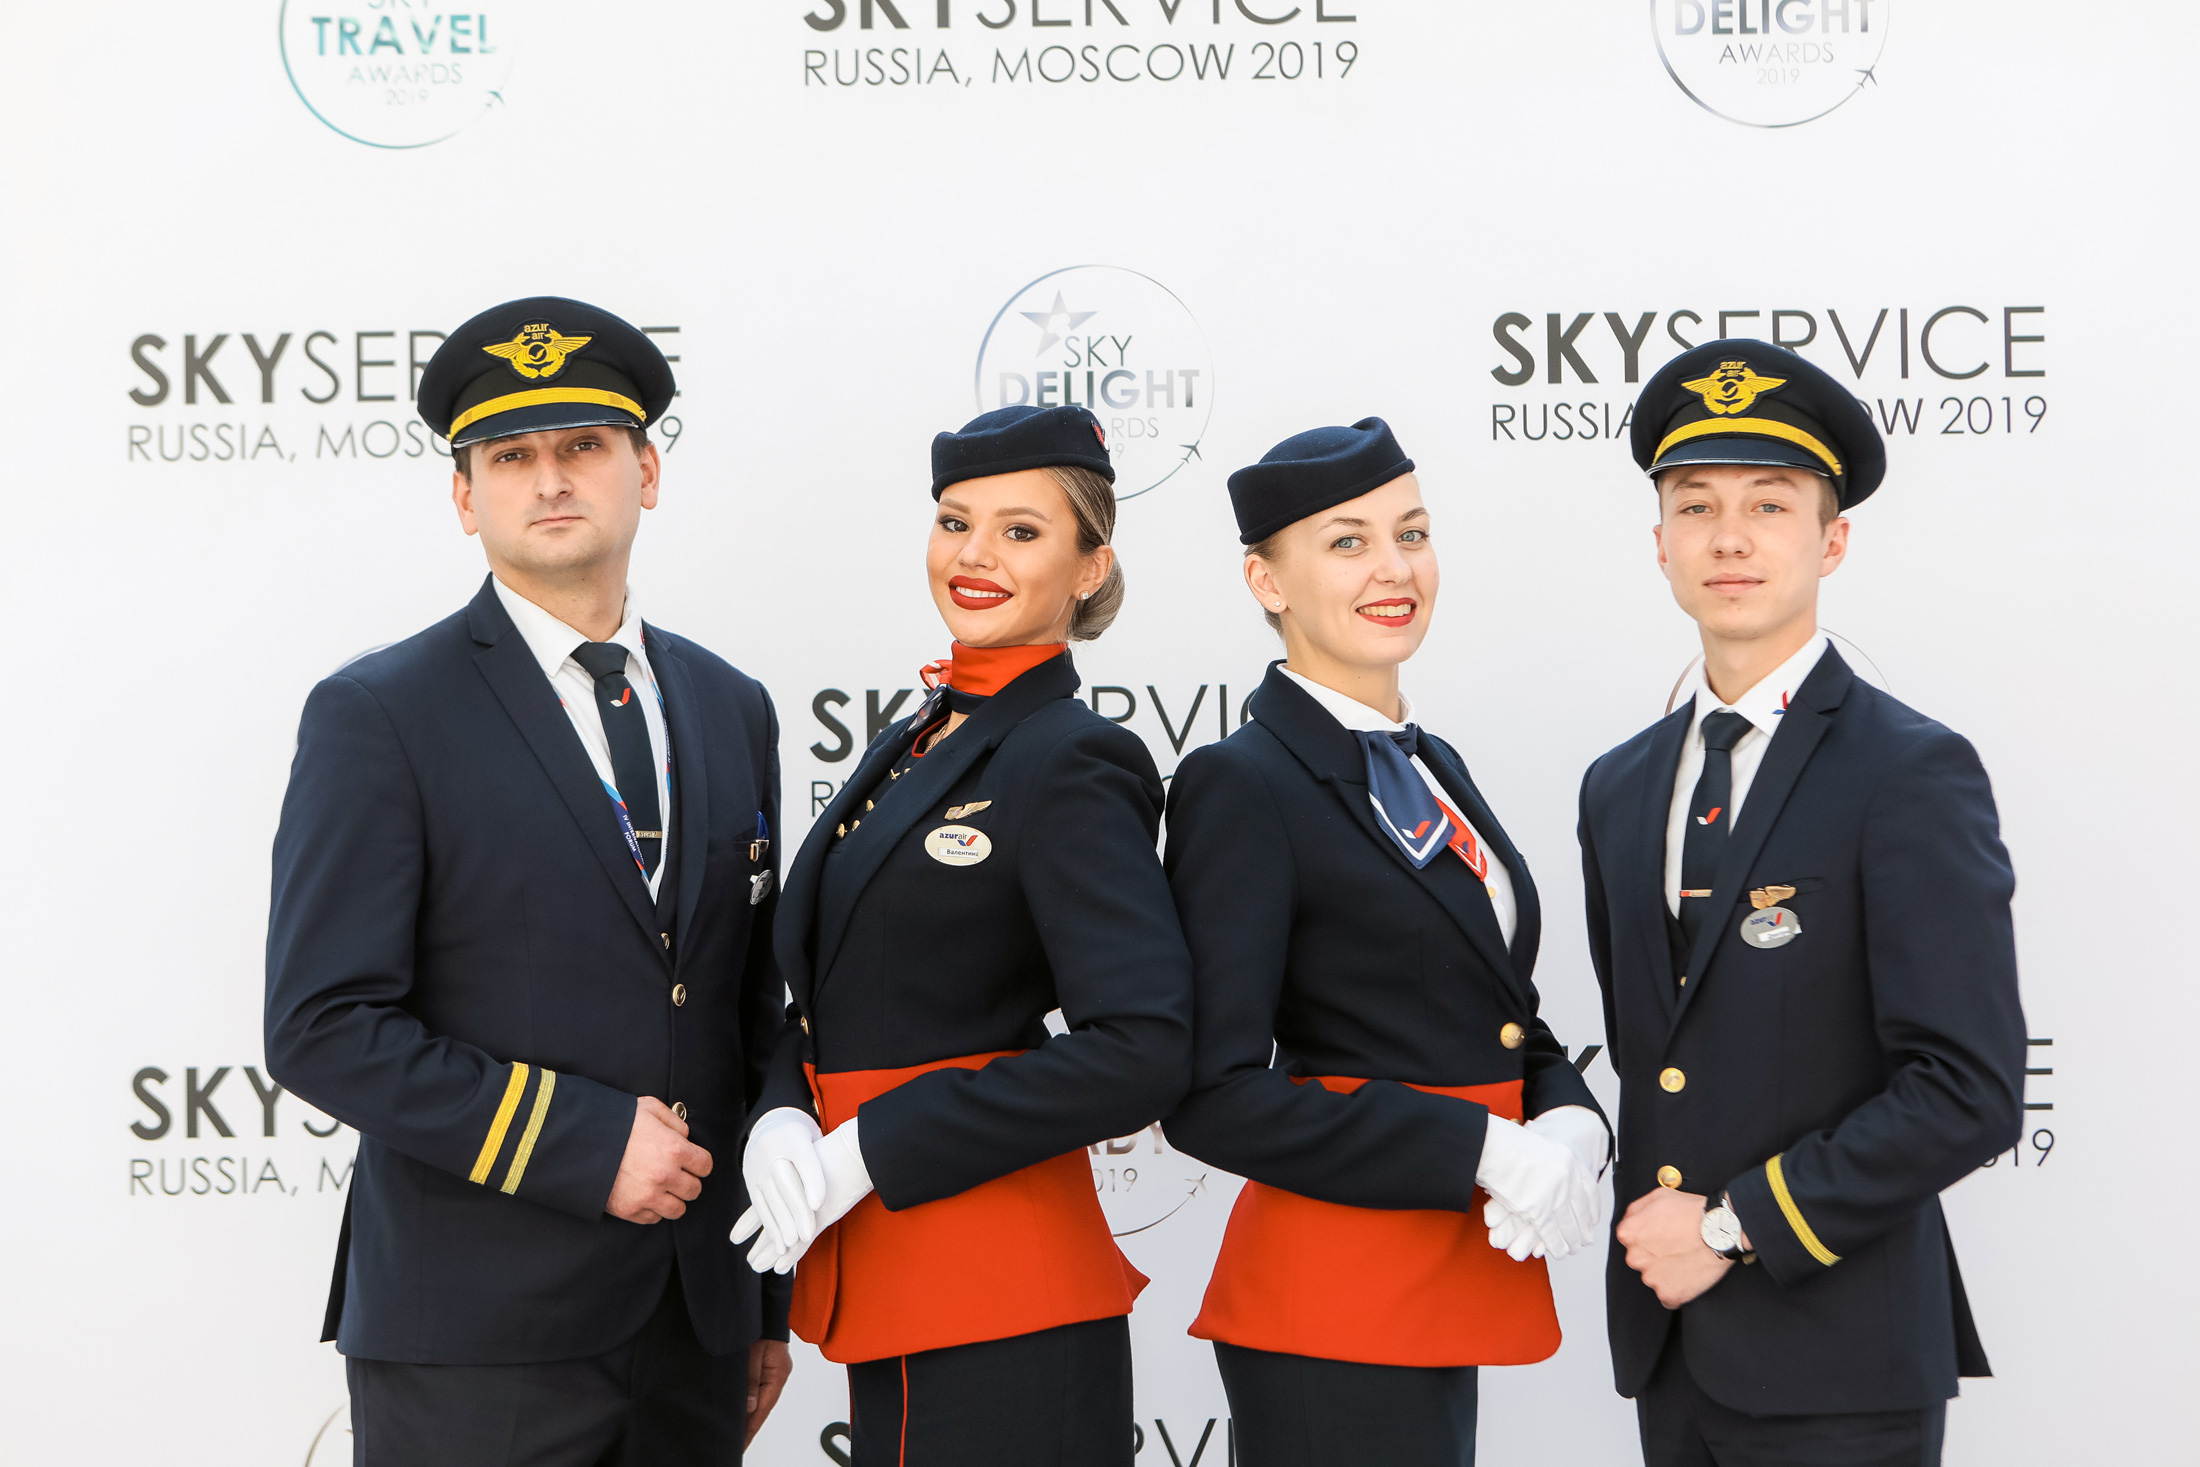 AZUR air, Новости, 30 апреля 2019, Команда AZUR air получила «золото» на международном форуме SkyService-2019